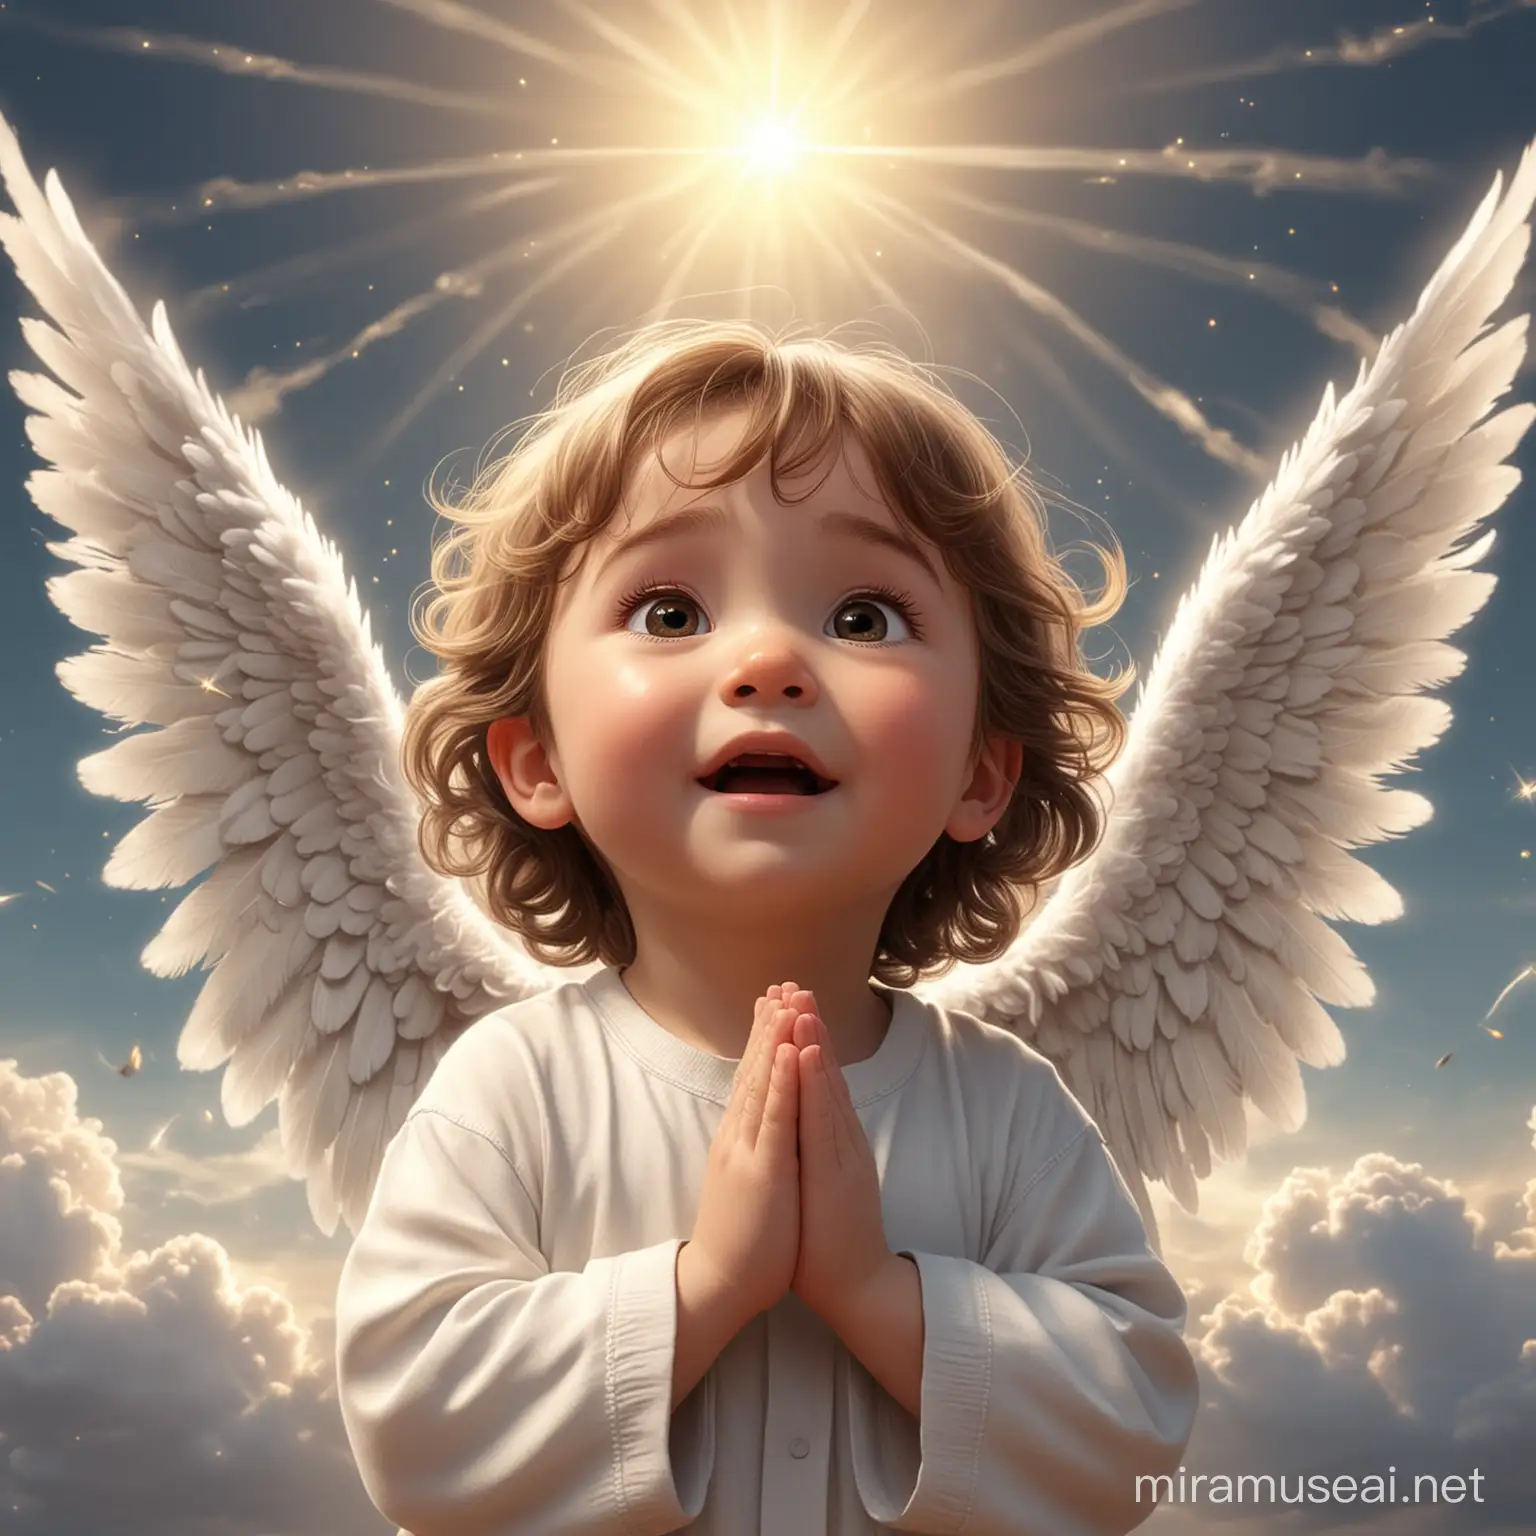 Child Praying to Joyful Angel for Help